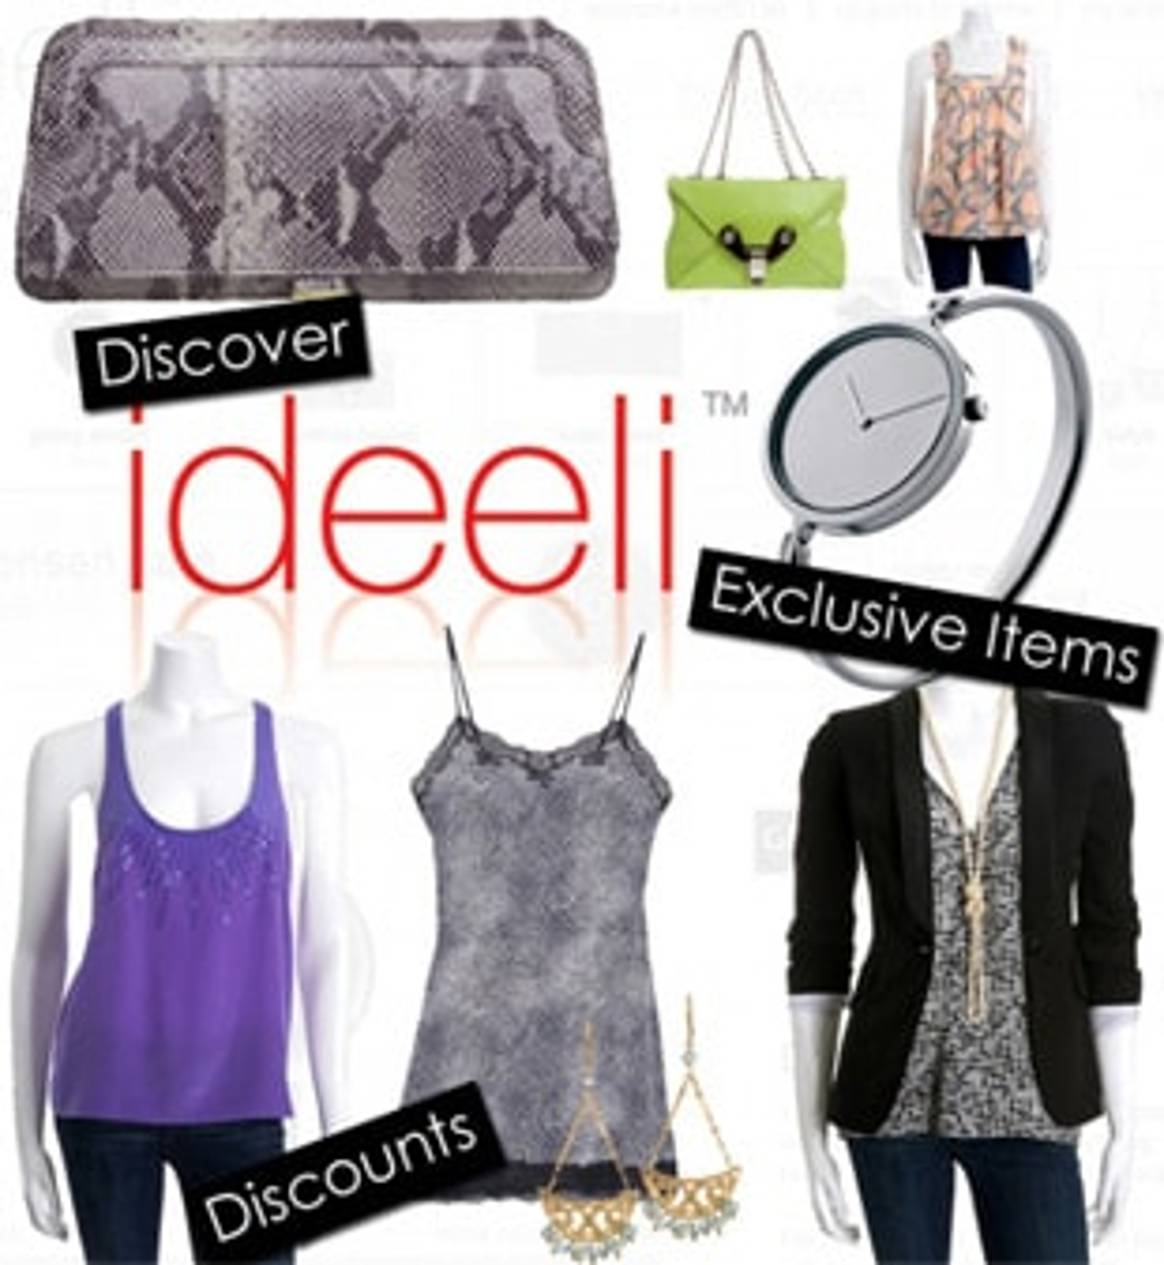 Groupon купил онлайн-магазин одежды Ideeli